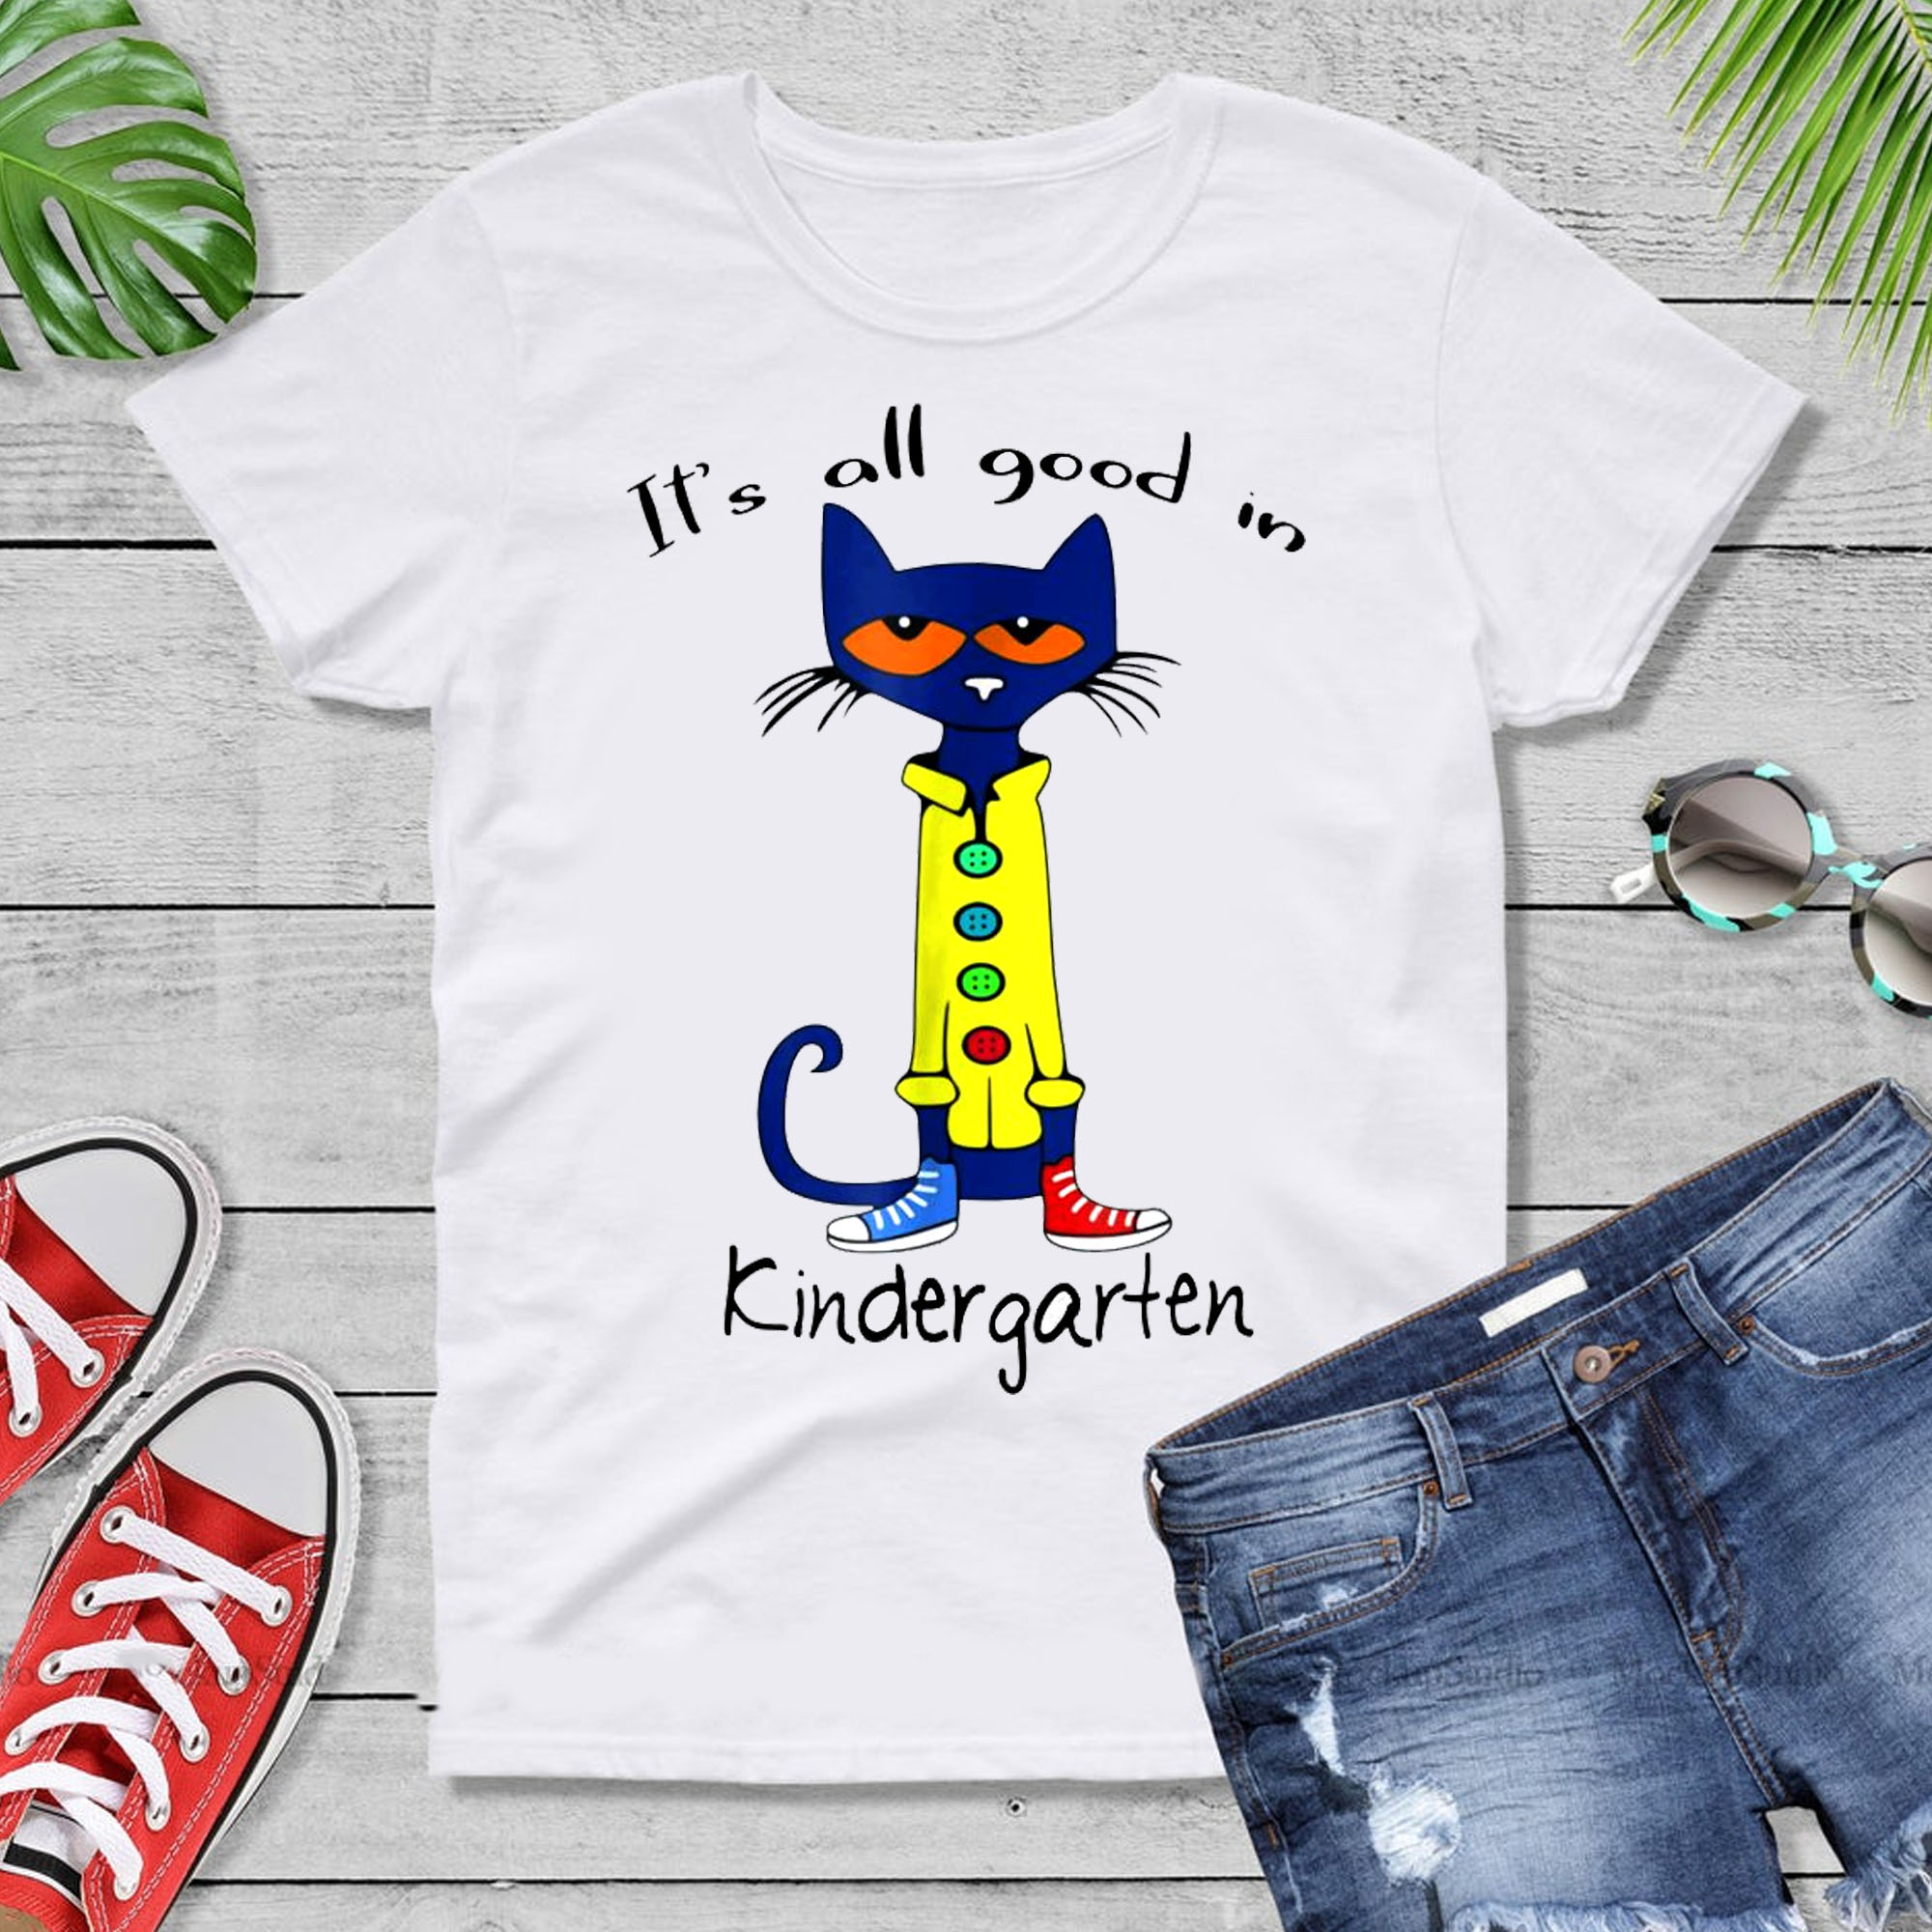 Its All Good In Kindergarten Classic Shirt, Pete The Cat Kindergarten Shirt Funny Gift For Men Women